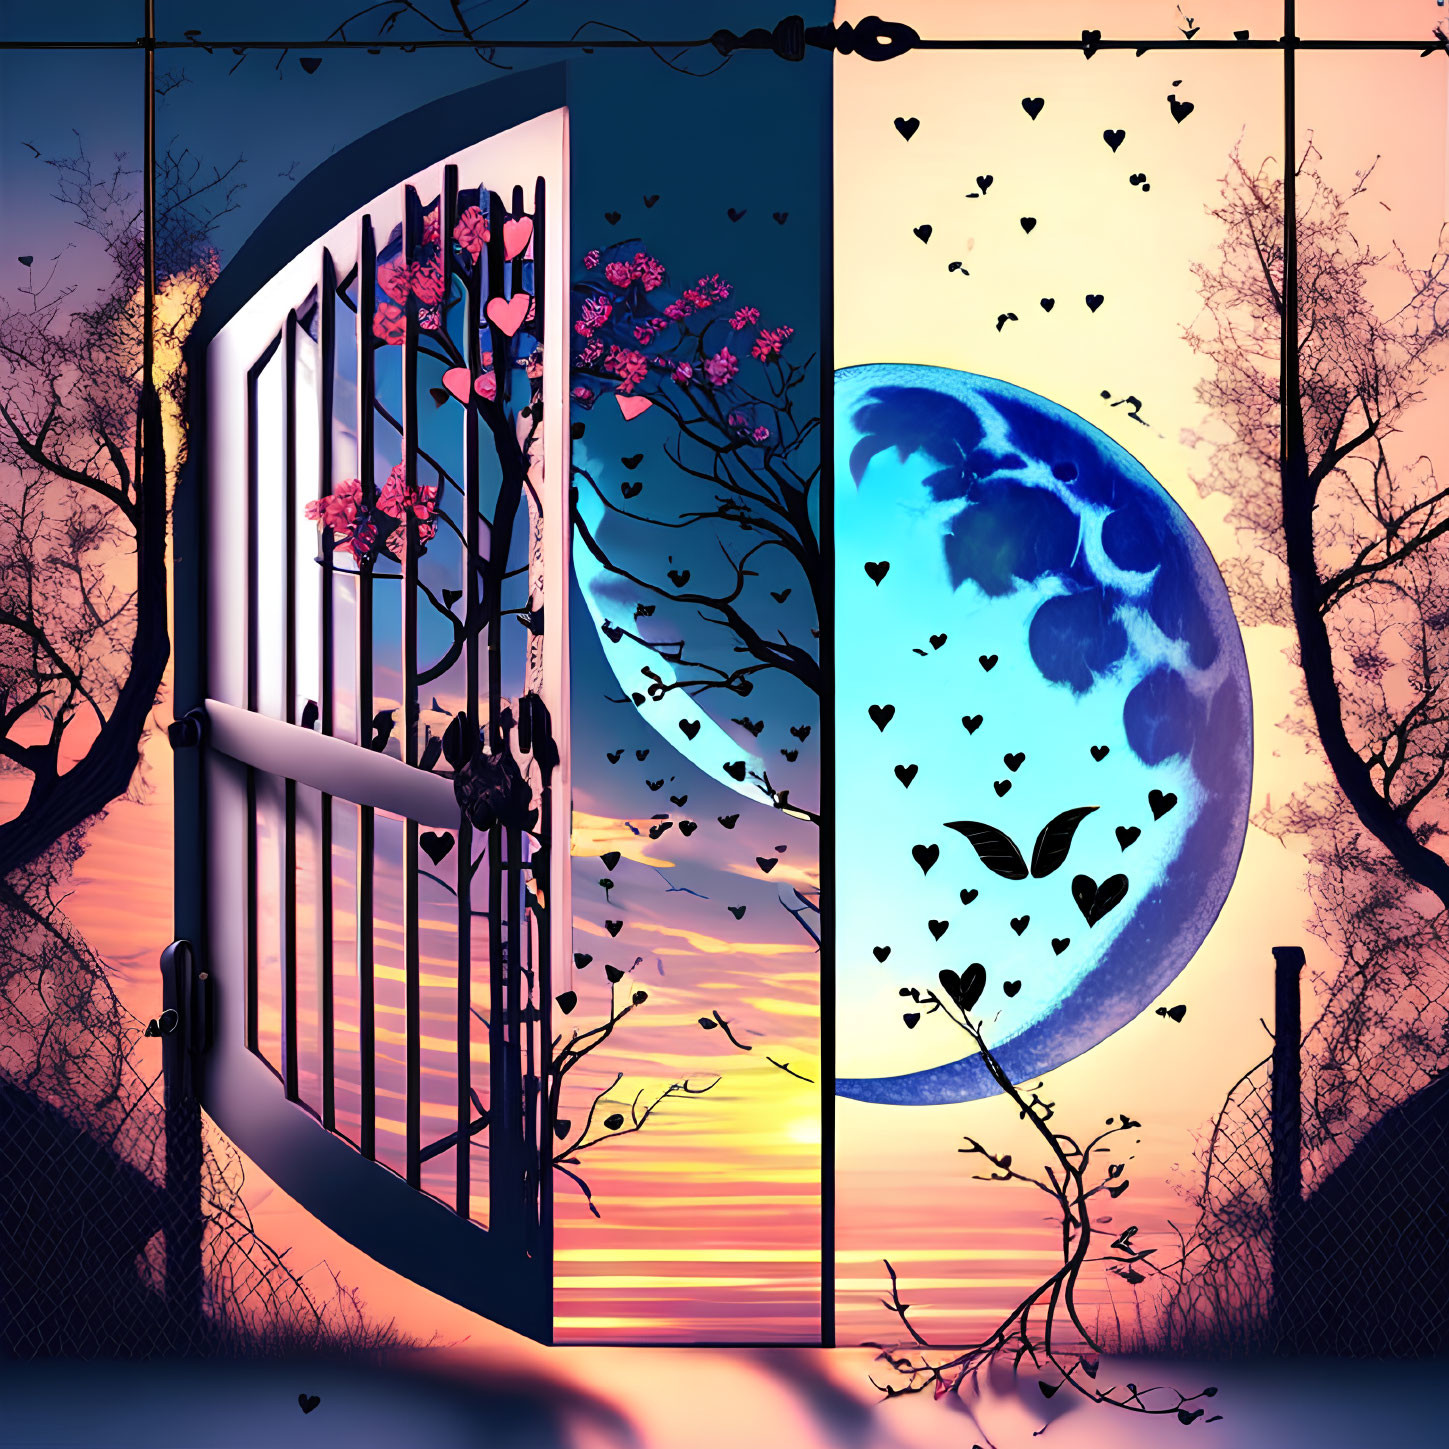 Digital artwork: Open gate divides sunset and night scenes